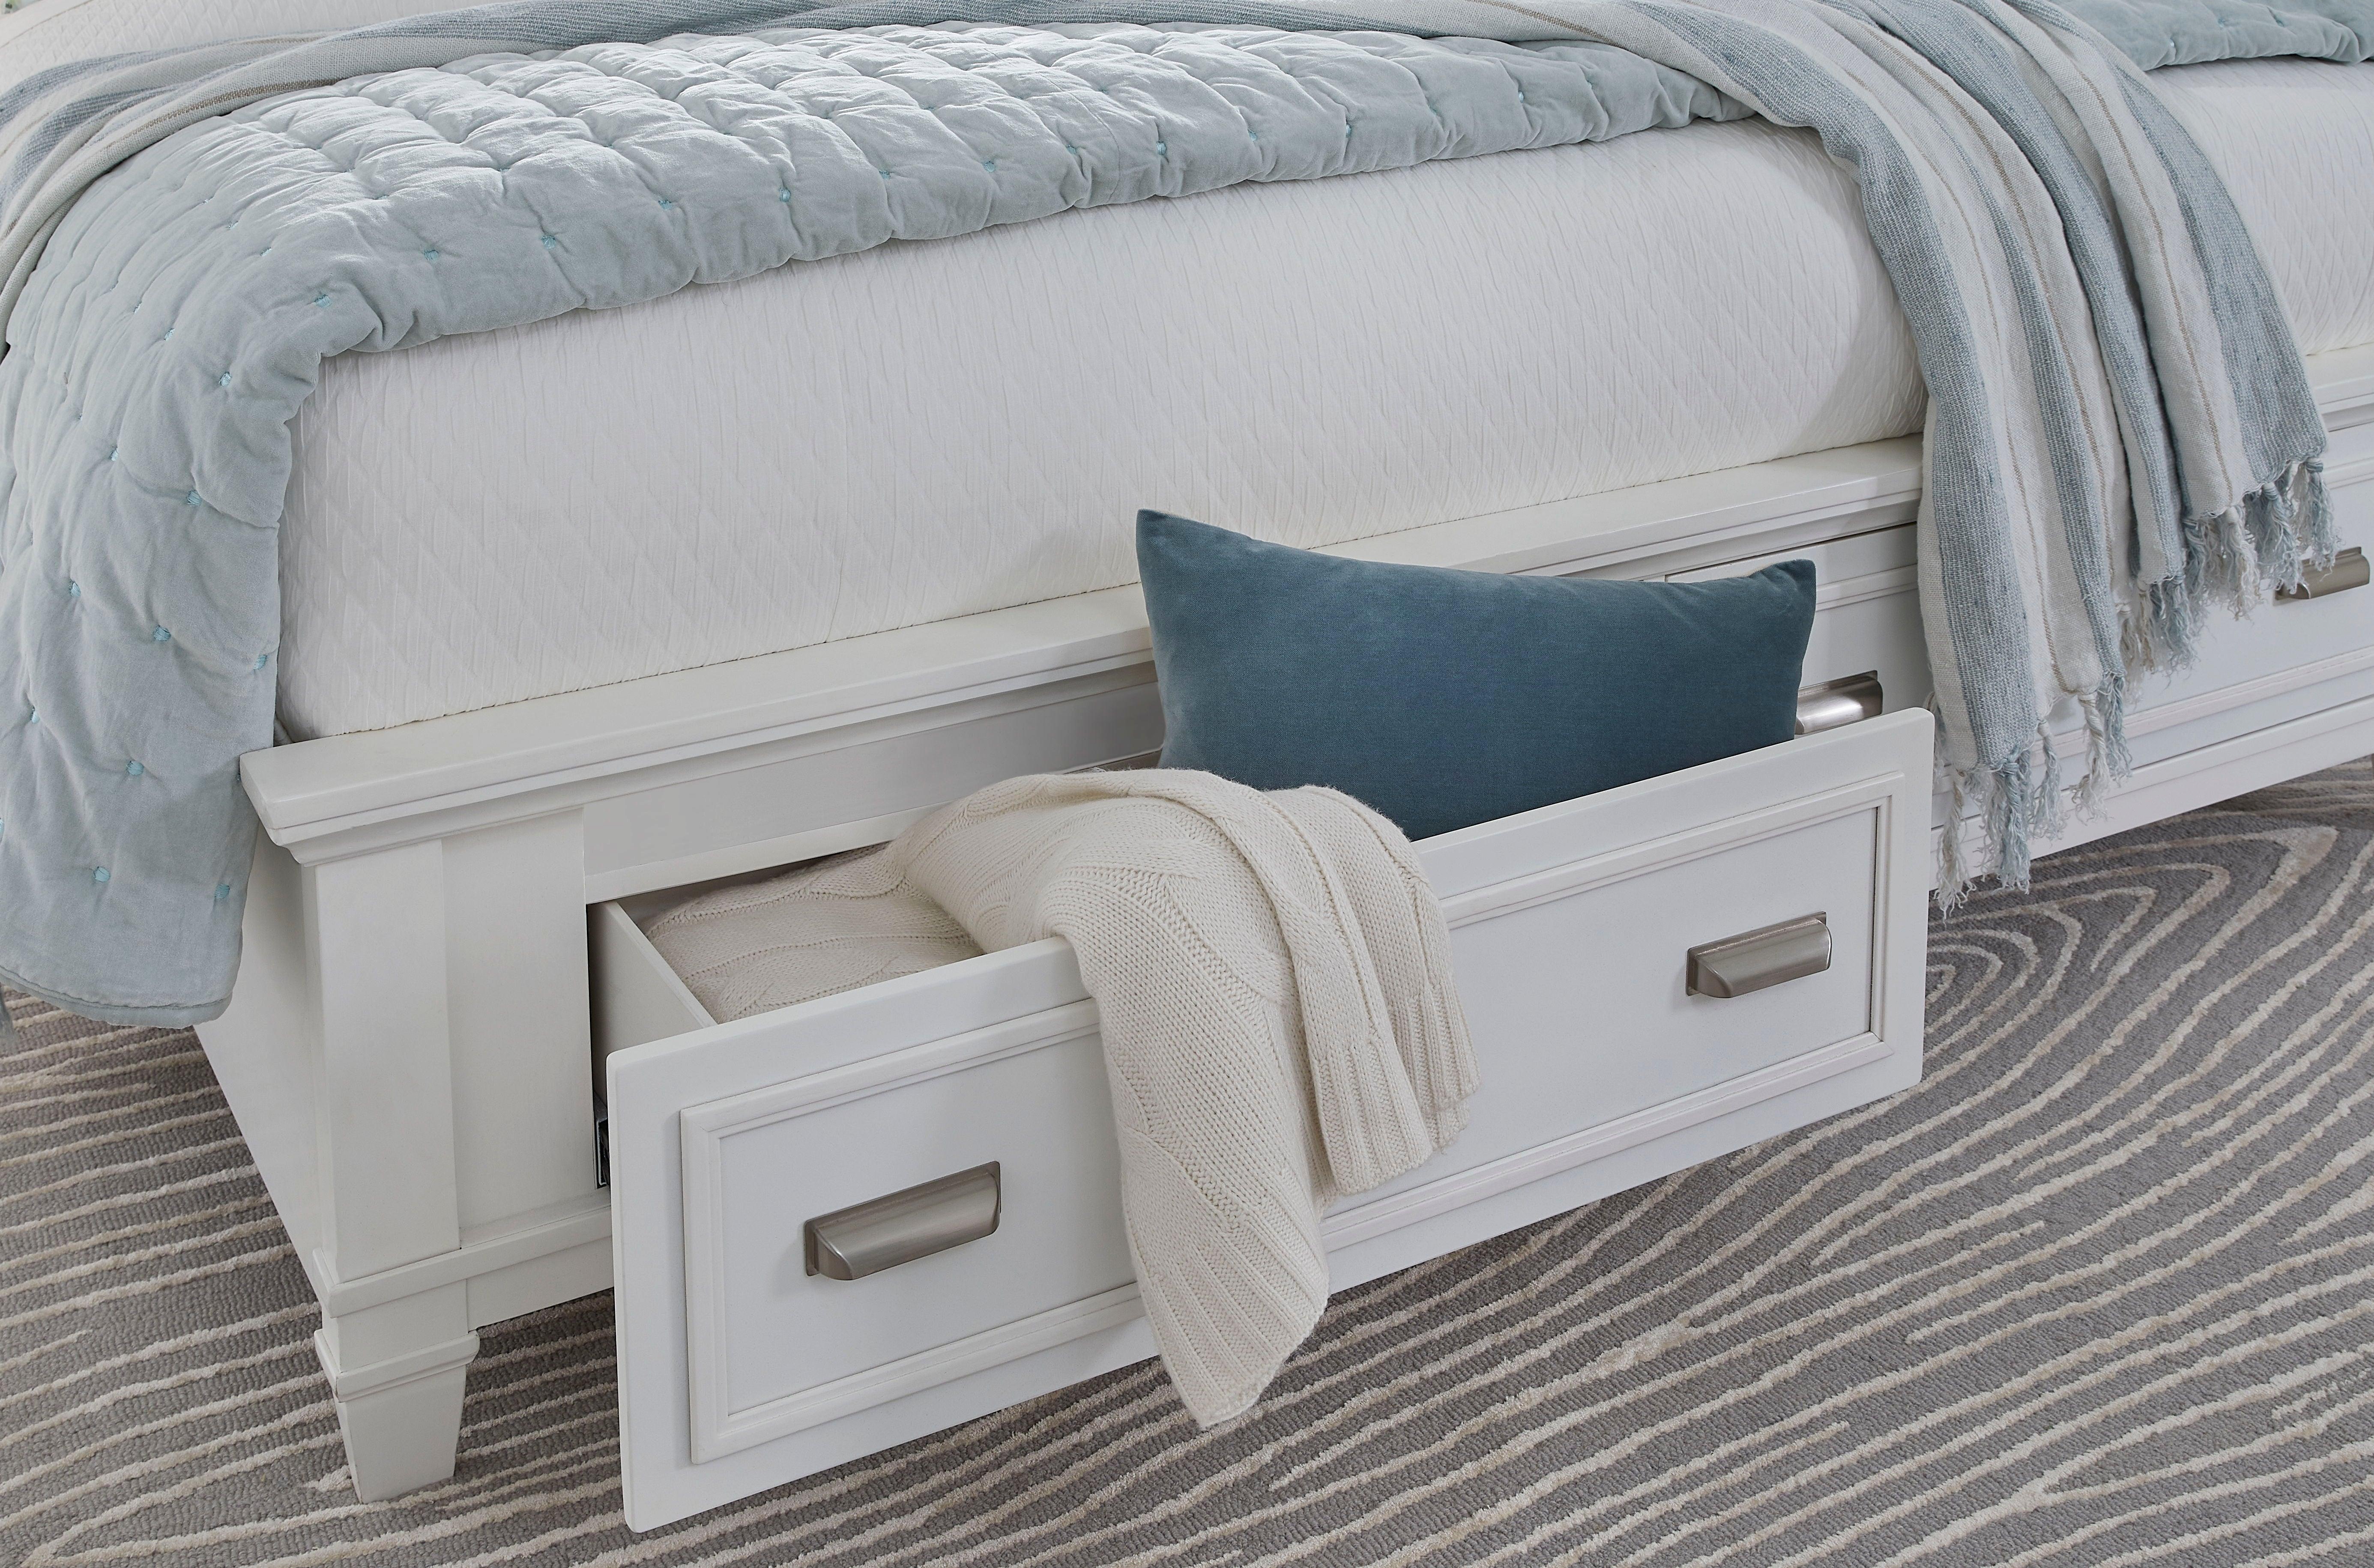 Magnussen Furniture - Charleston - Panel Storage Bed - 5th Avenue Furniture